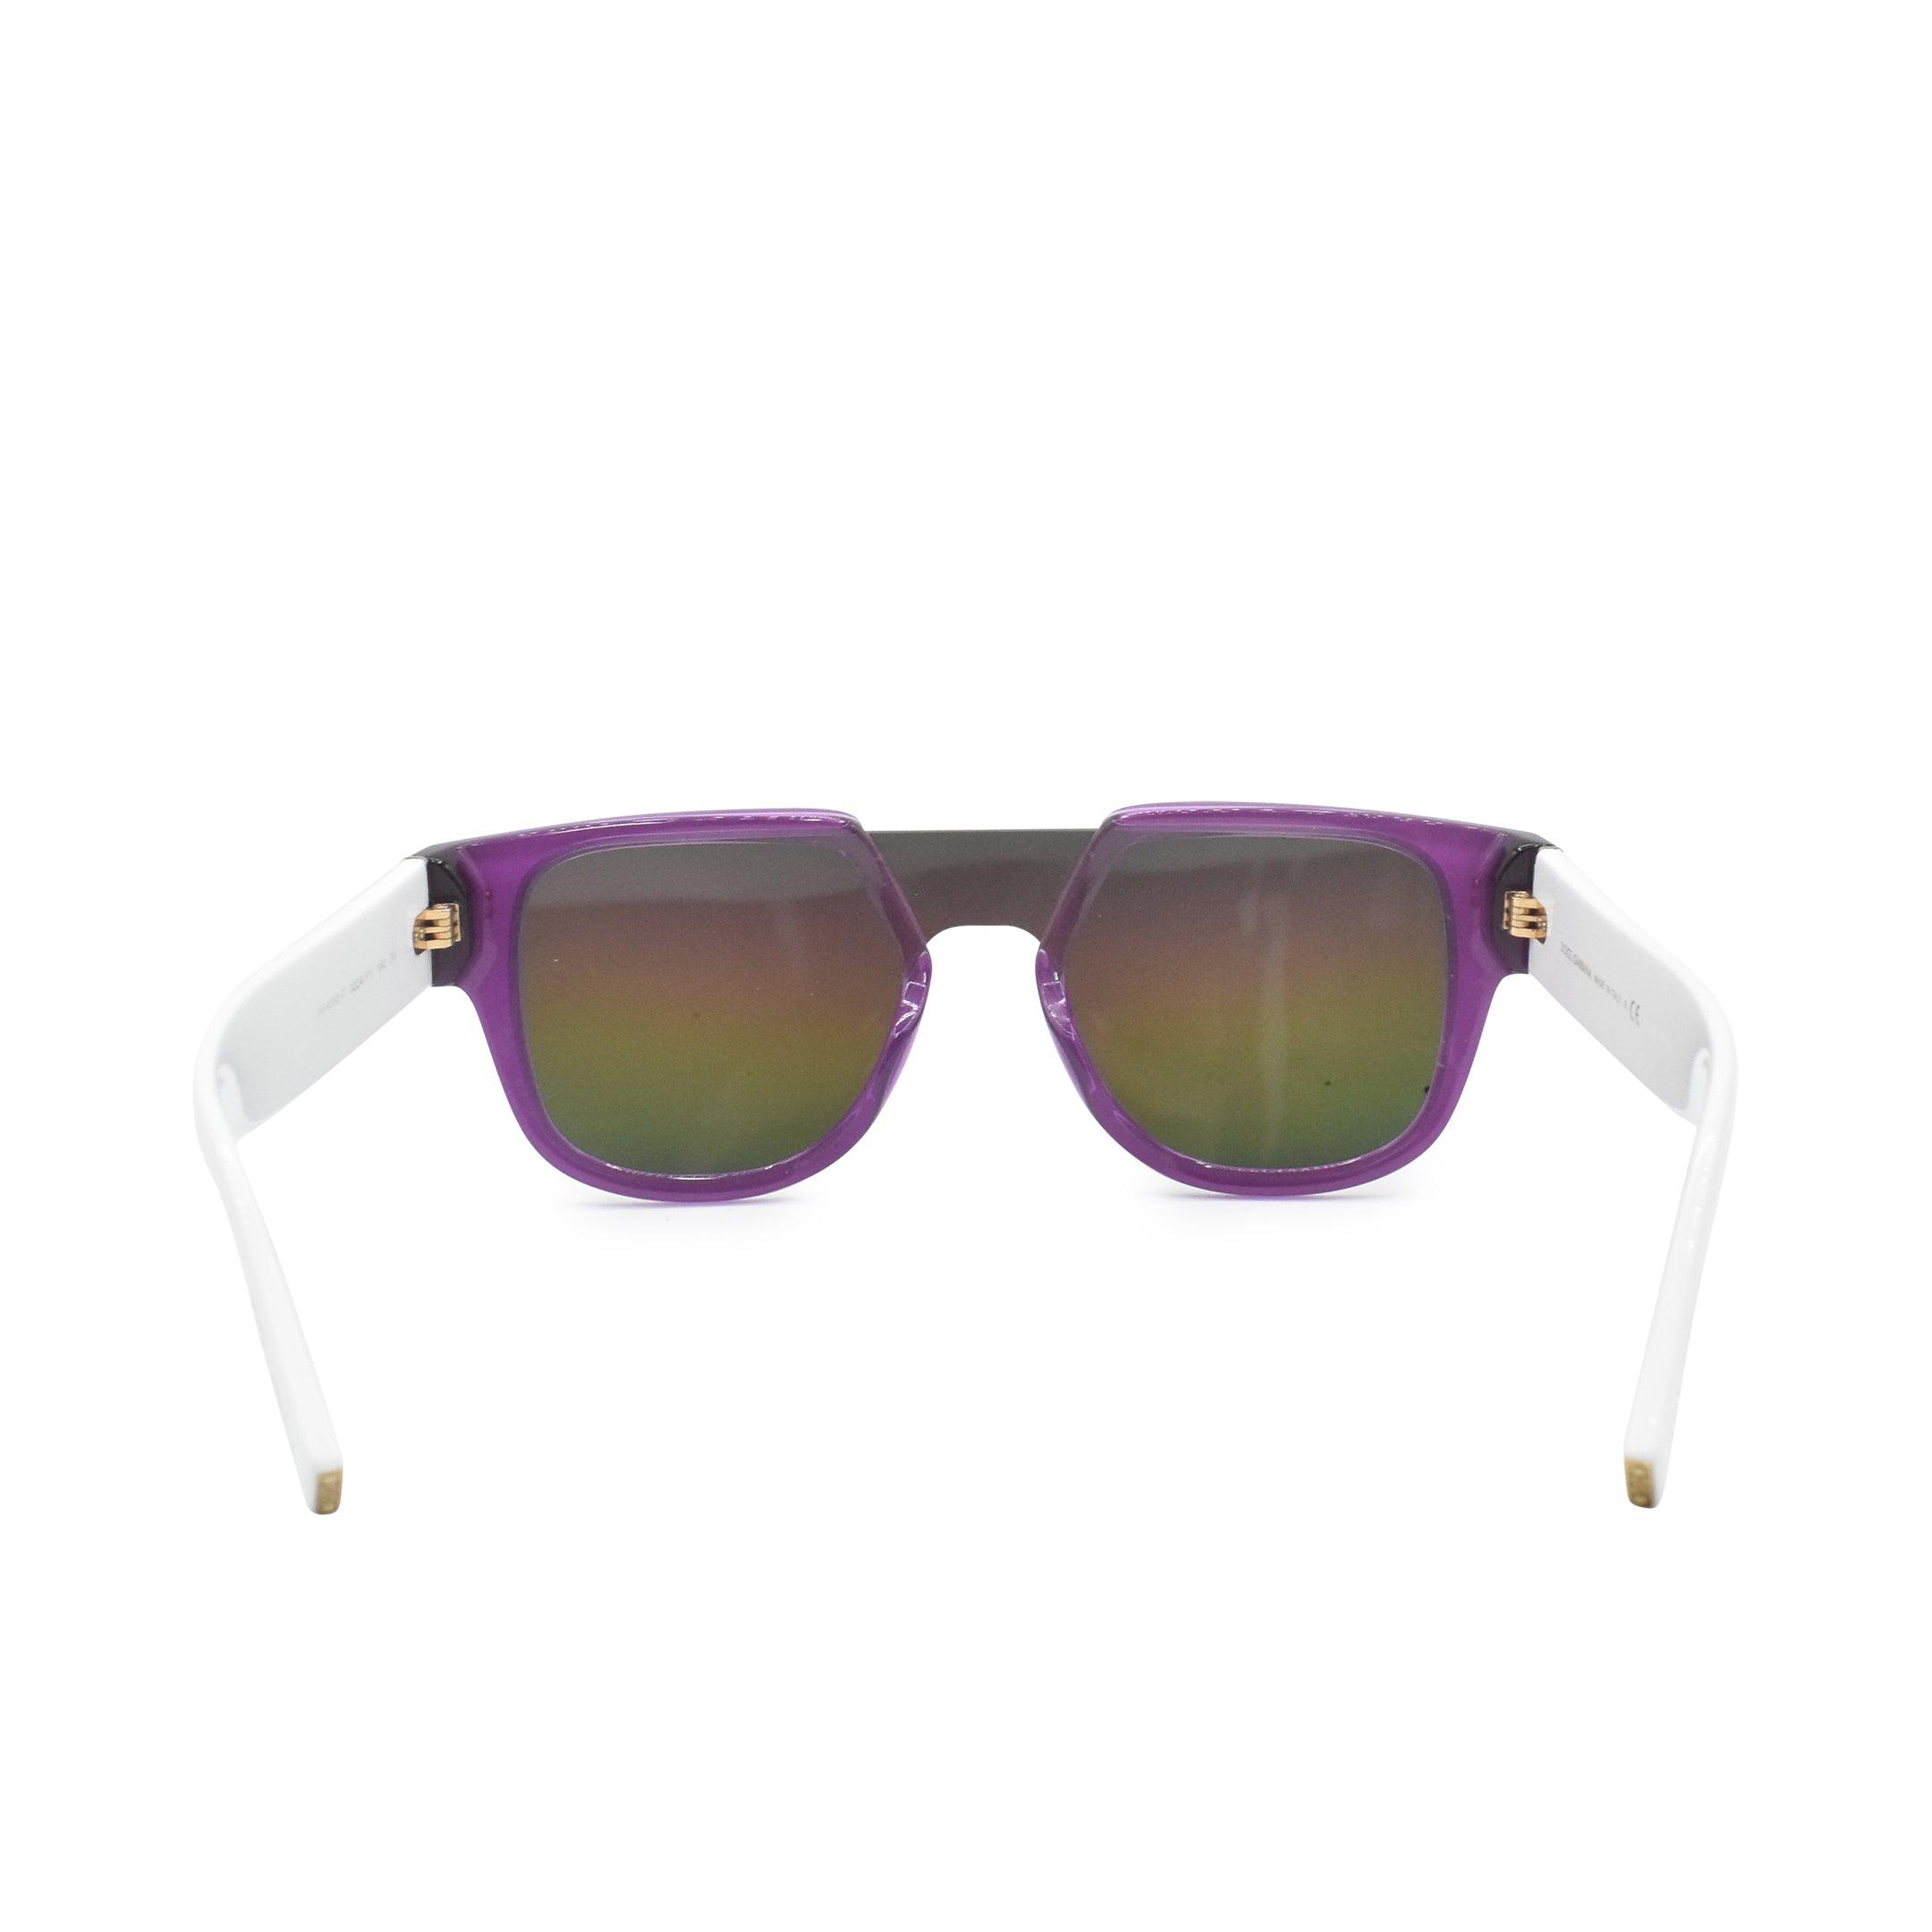 Dolce & Gabbana Sunglasses - Fashionably Yours